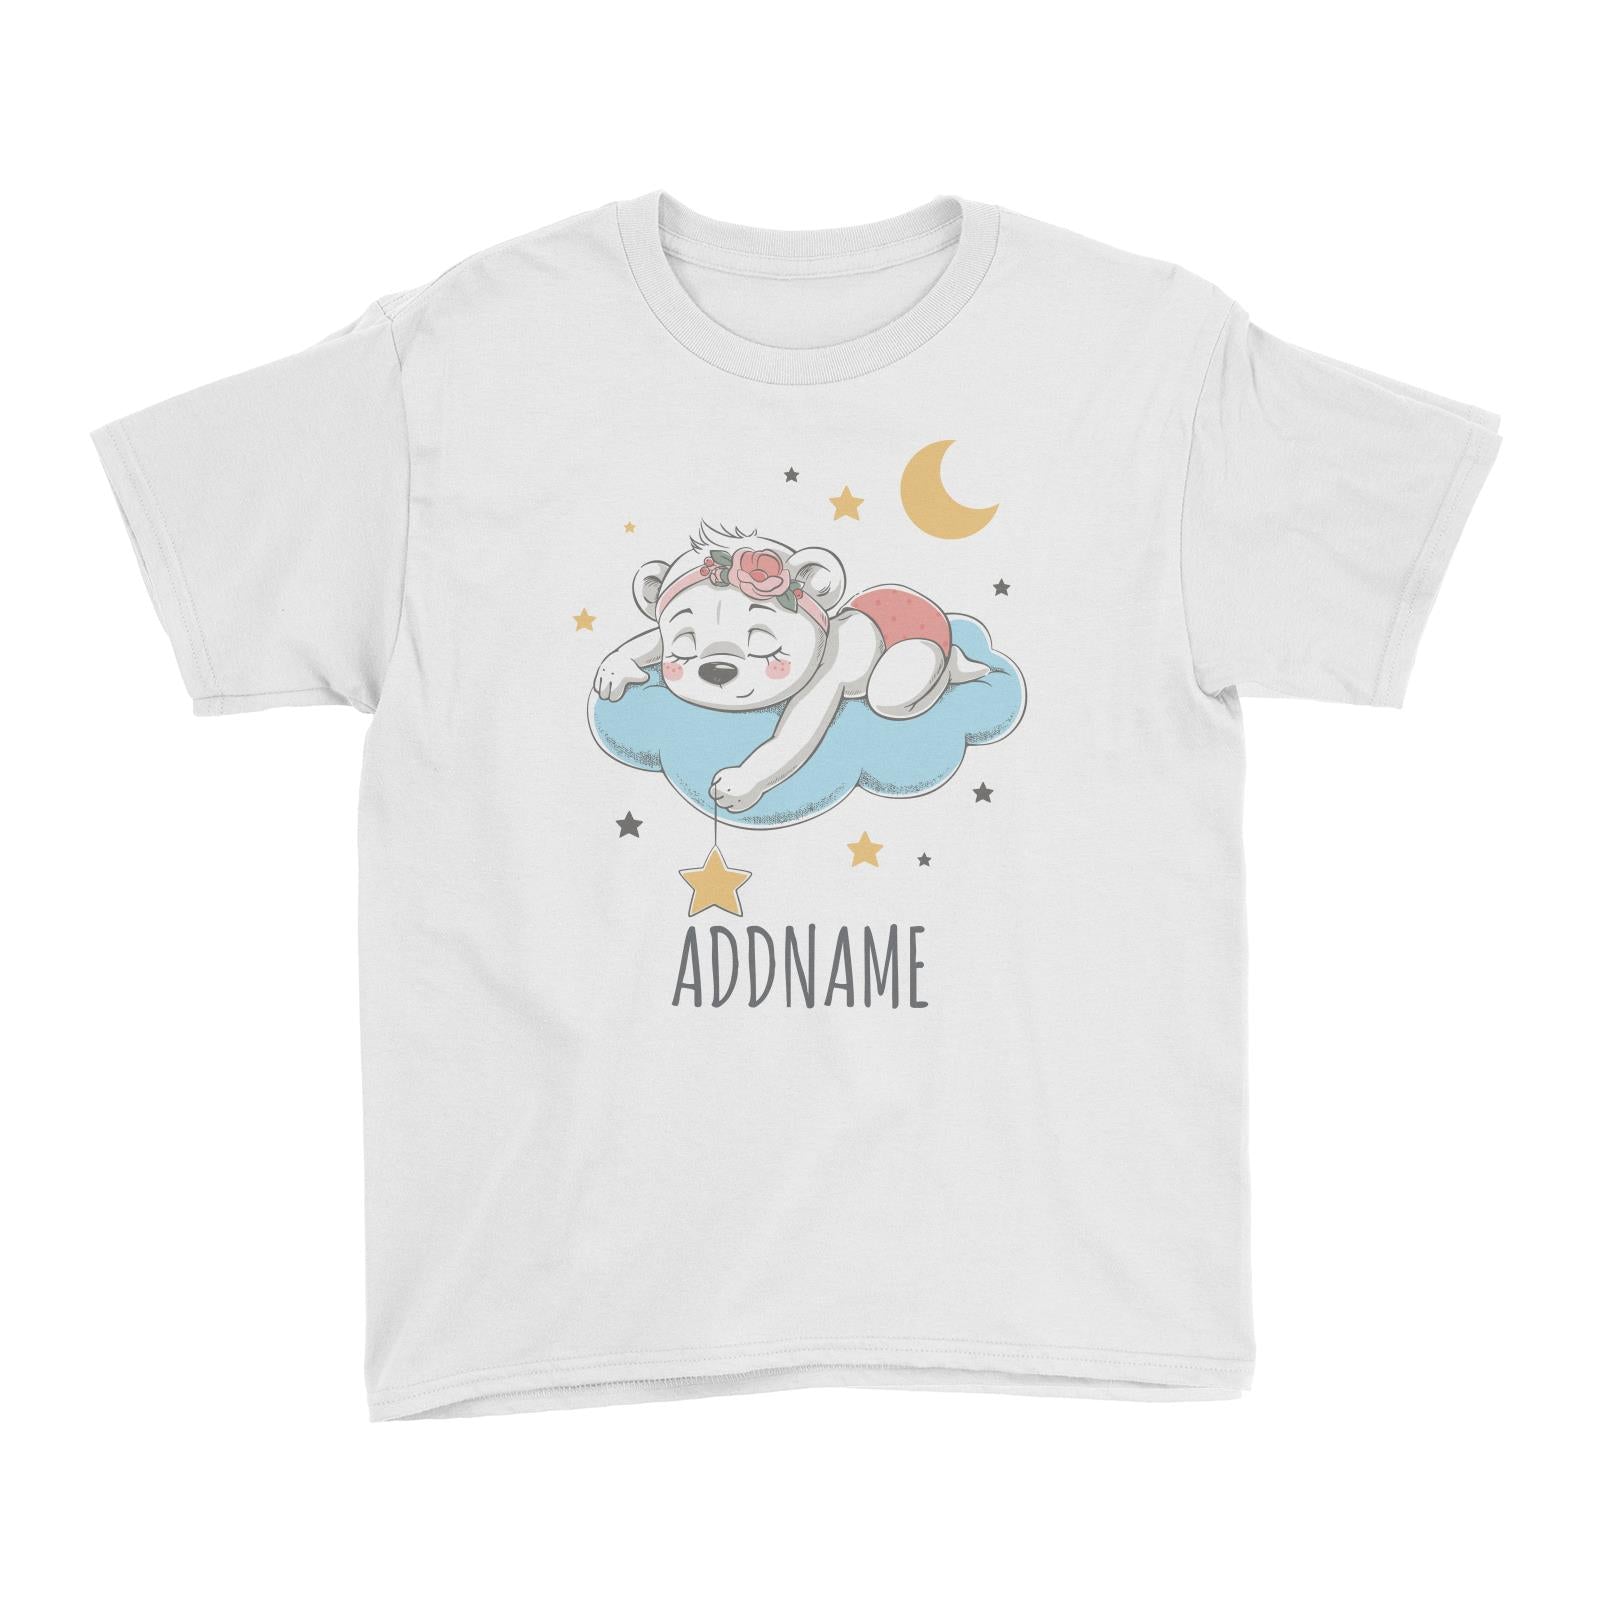 Sleeping Girl Bear on Cloud White Kid's T-Shirt Personalizable Designs Cute Sweet Animal For Girls Newborn HG